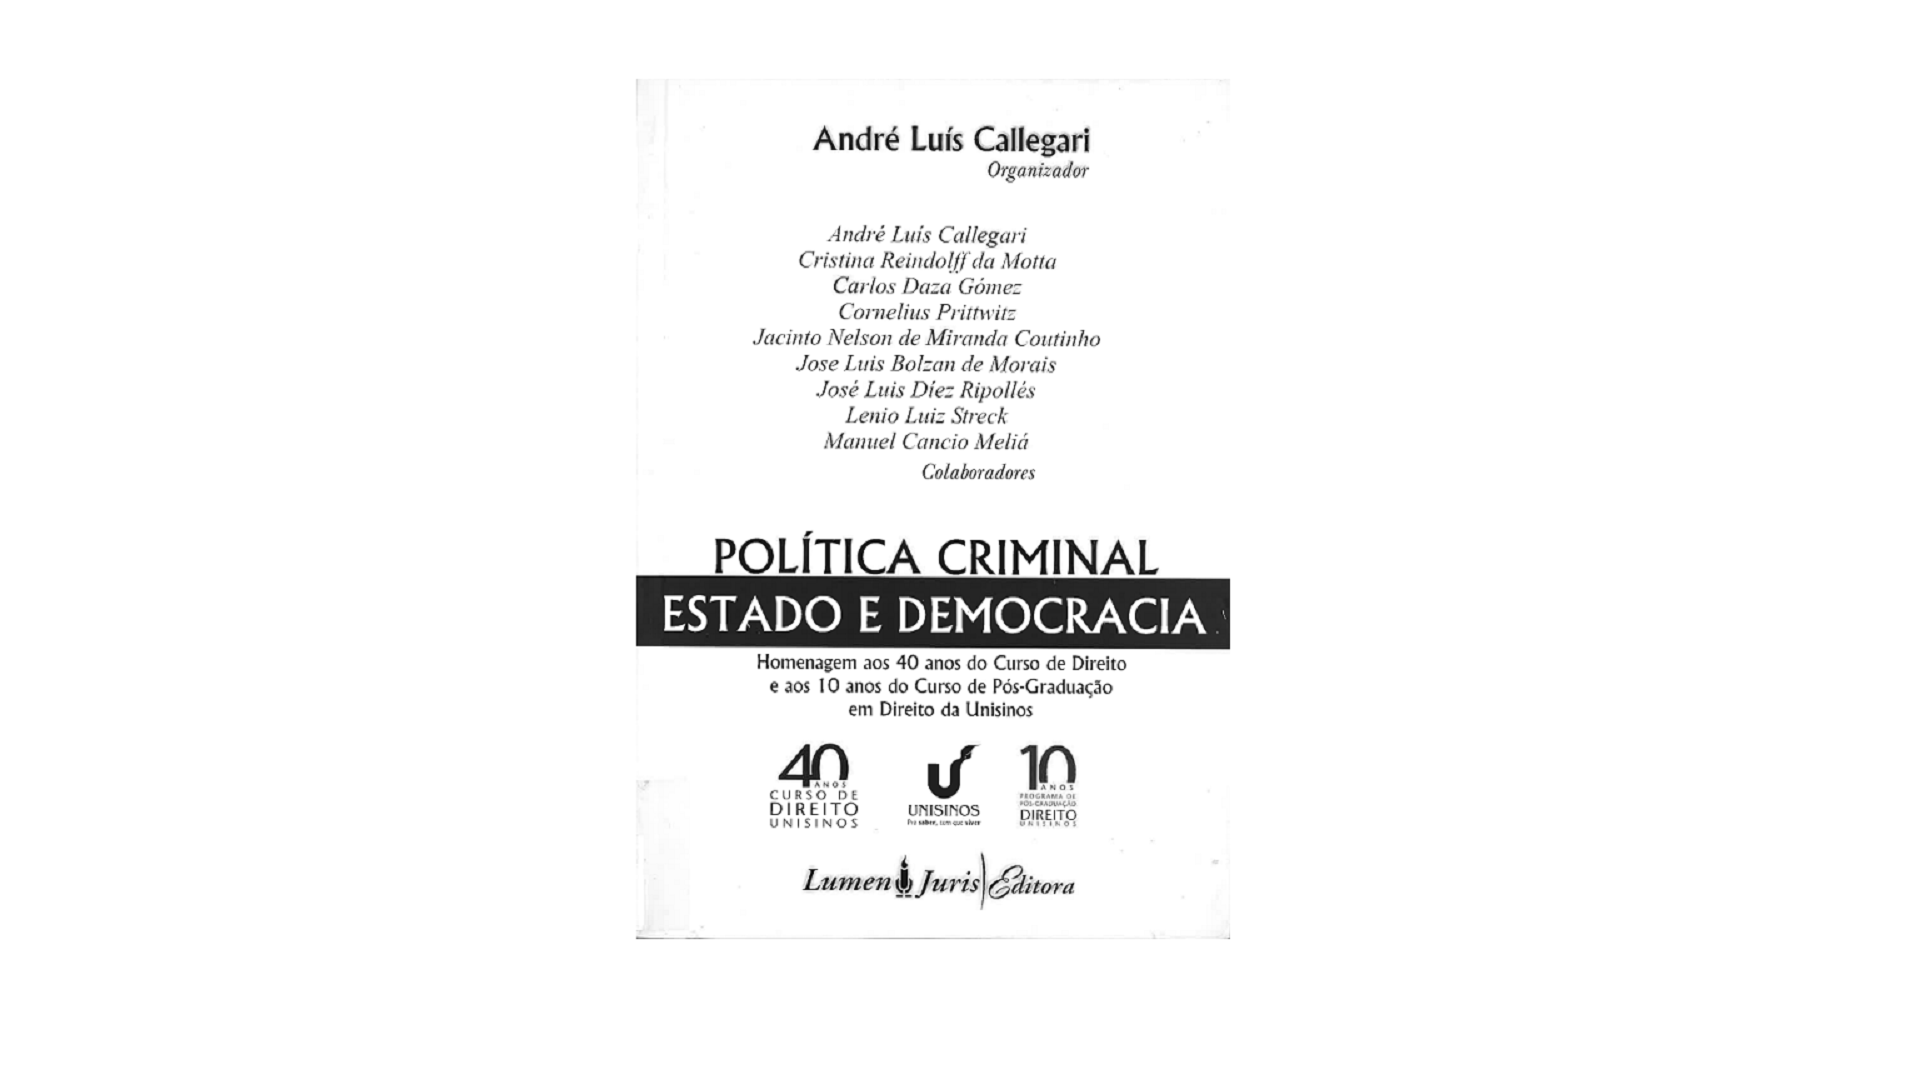 Imagen de portada del libro Política criminal estado e democracia